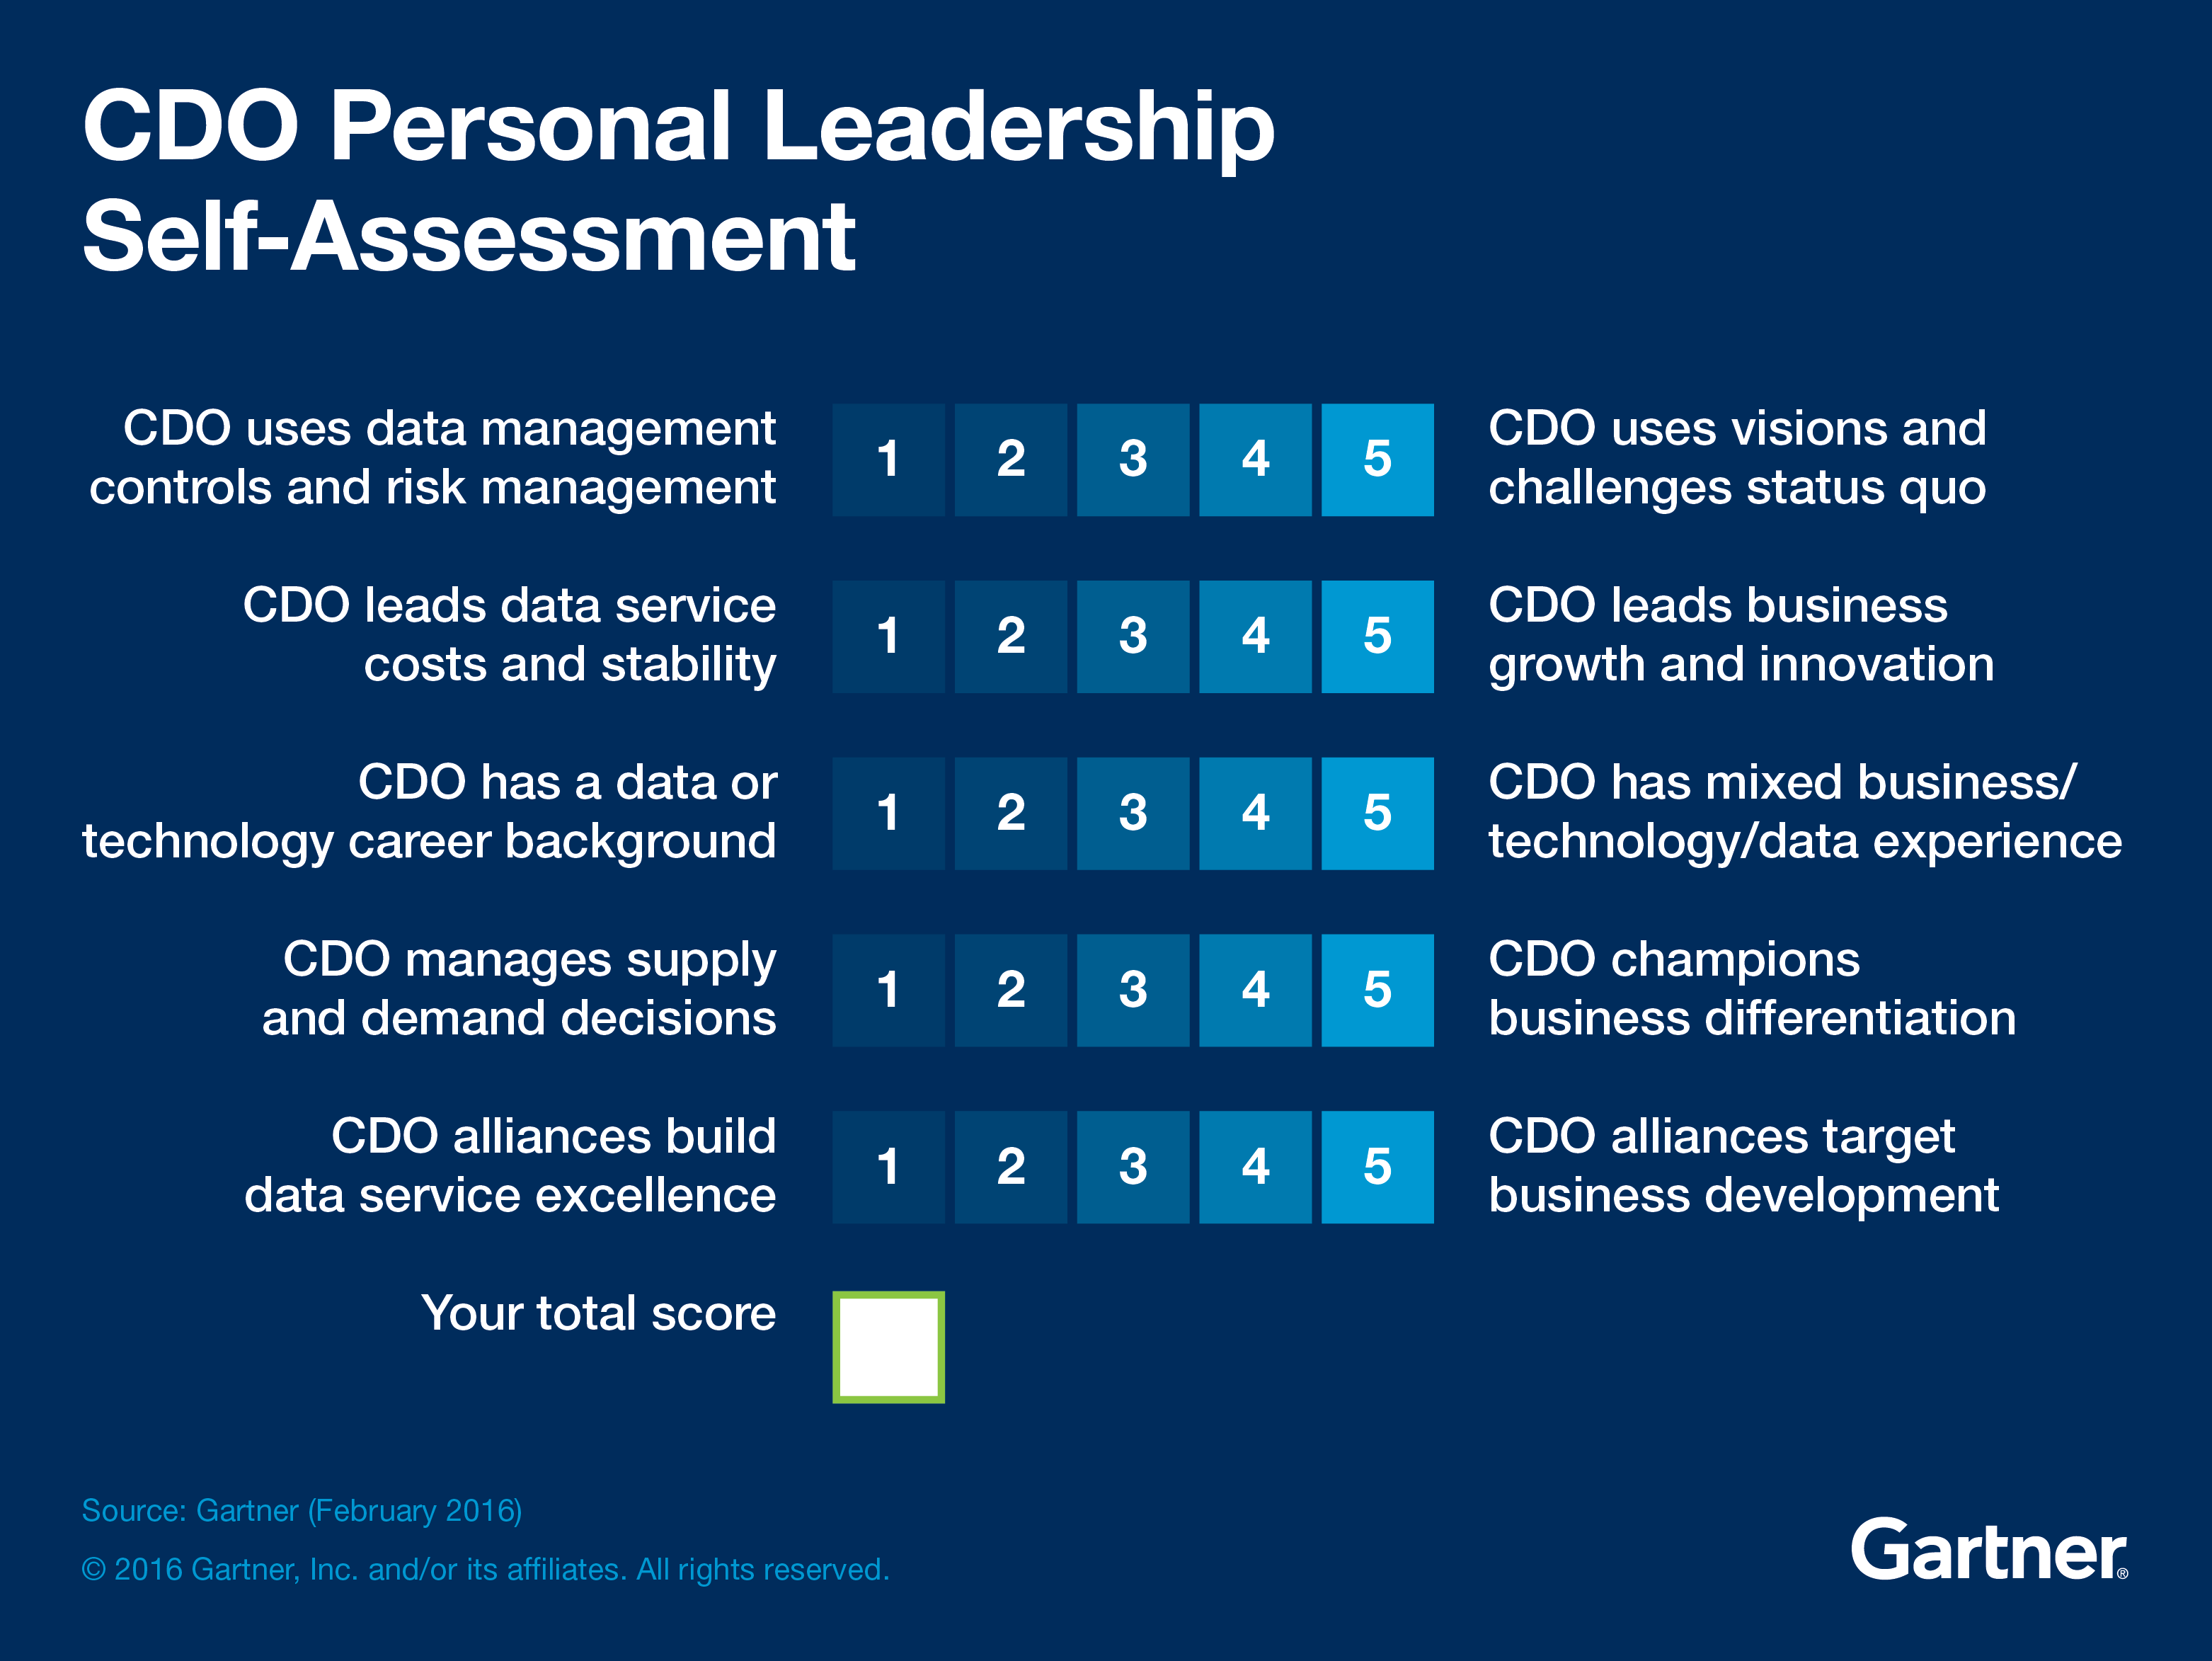 Chief digital officer(CDO) Personal Leadership Self Assessment Scorecard